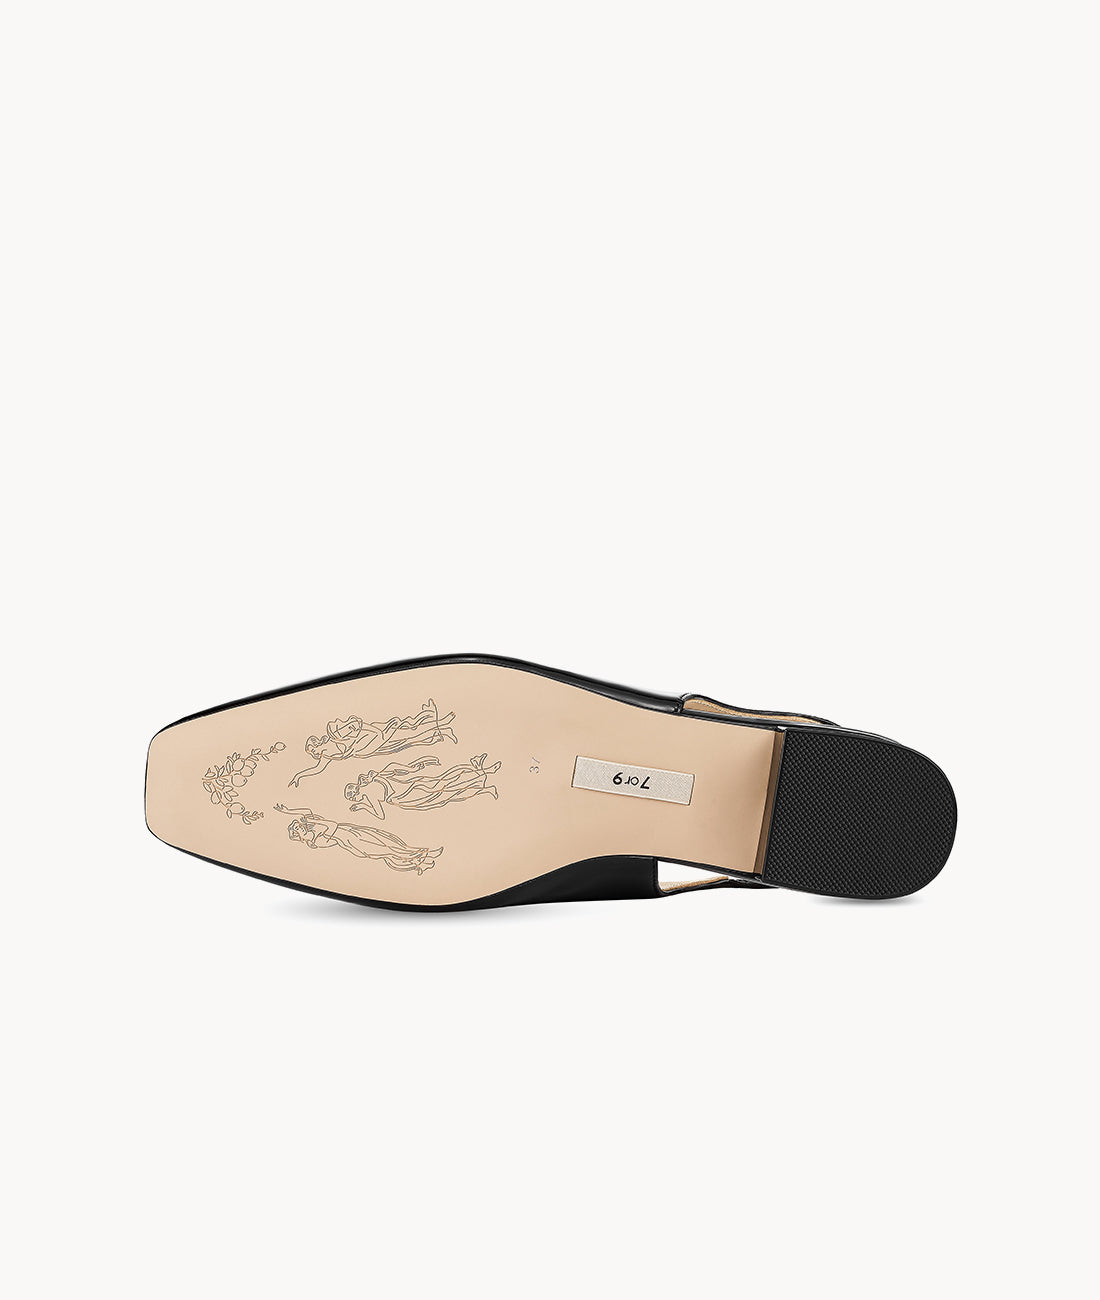 Black Lotus Mary Jane-Square-toe black Slingback Flat with 25mm heel